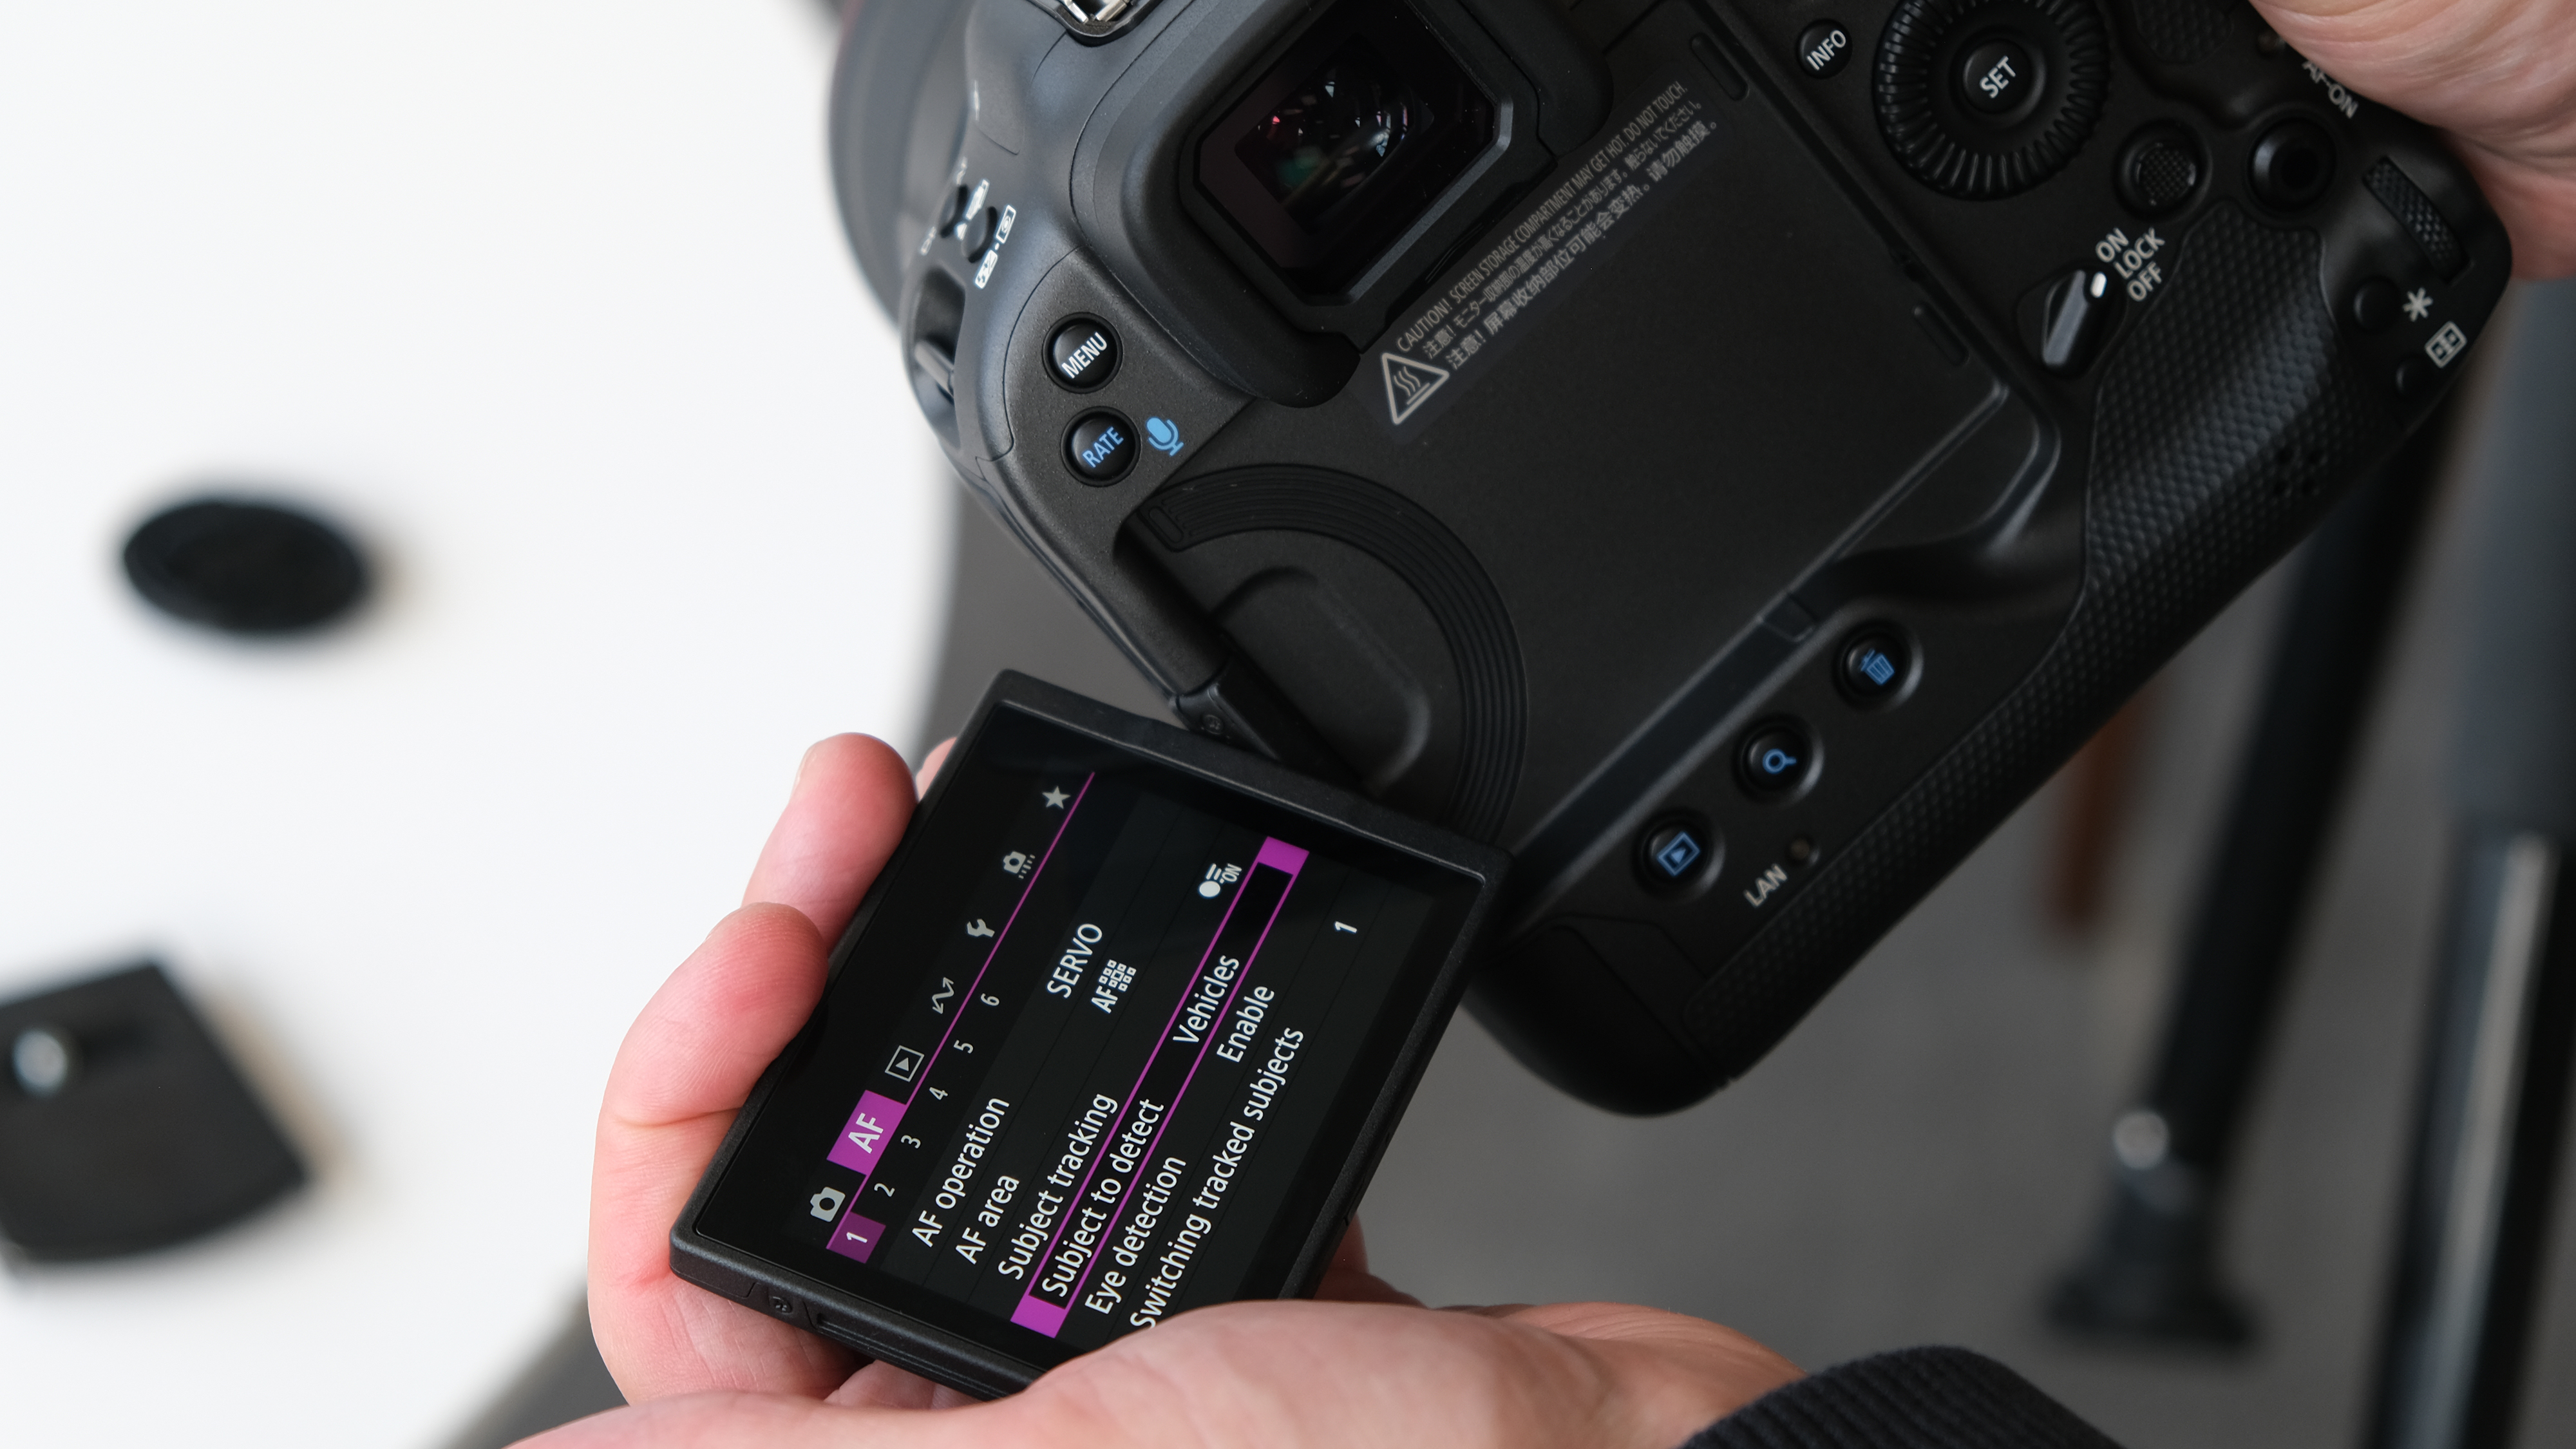 The vari-angle screen of the Canon EOS R3 mirrorless camera